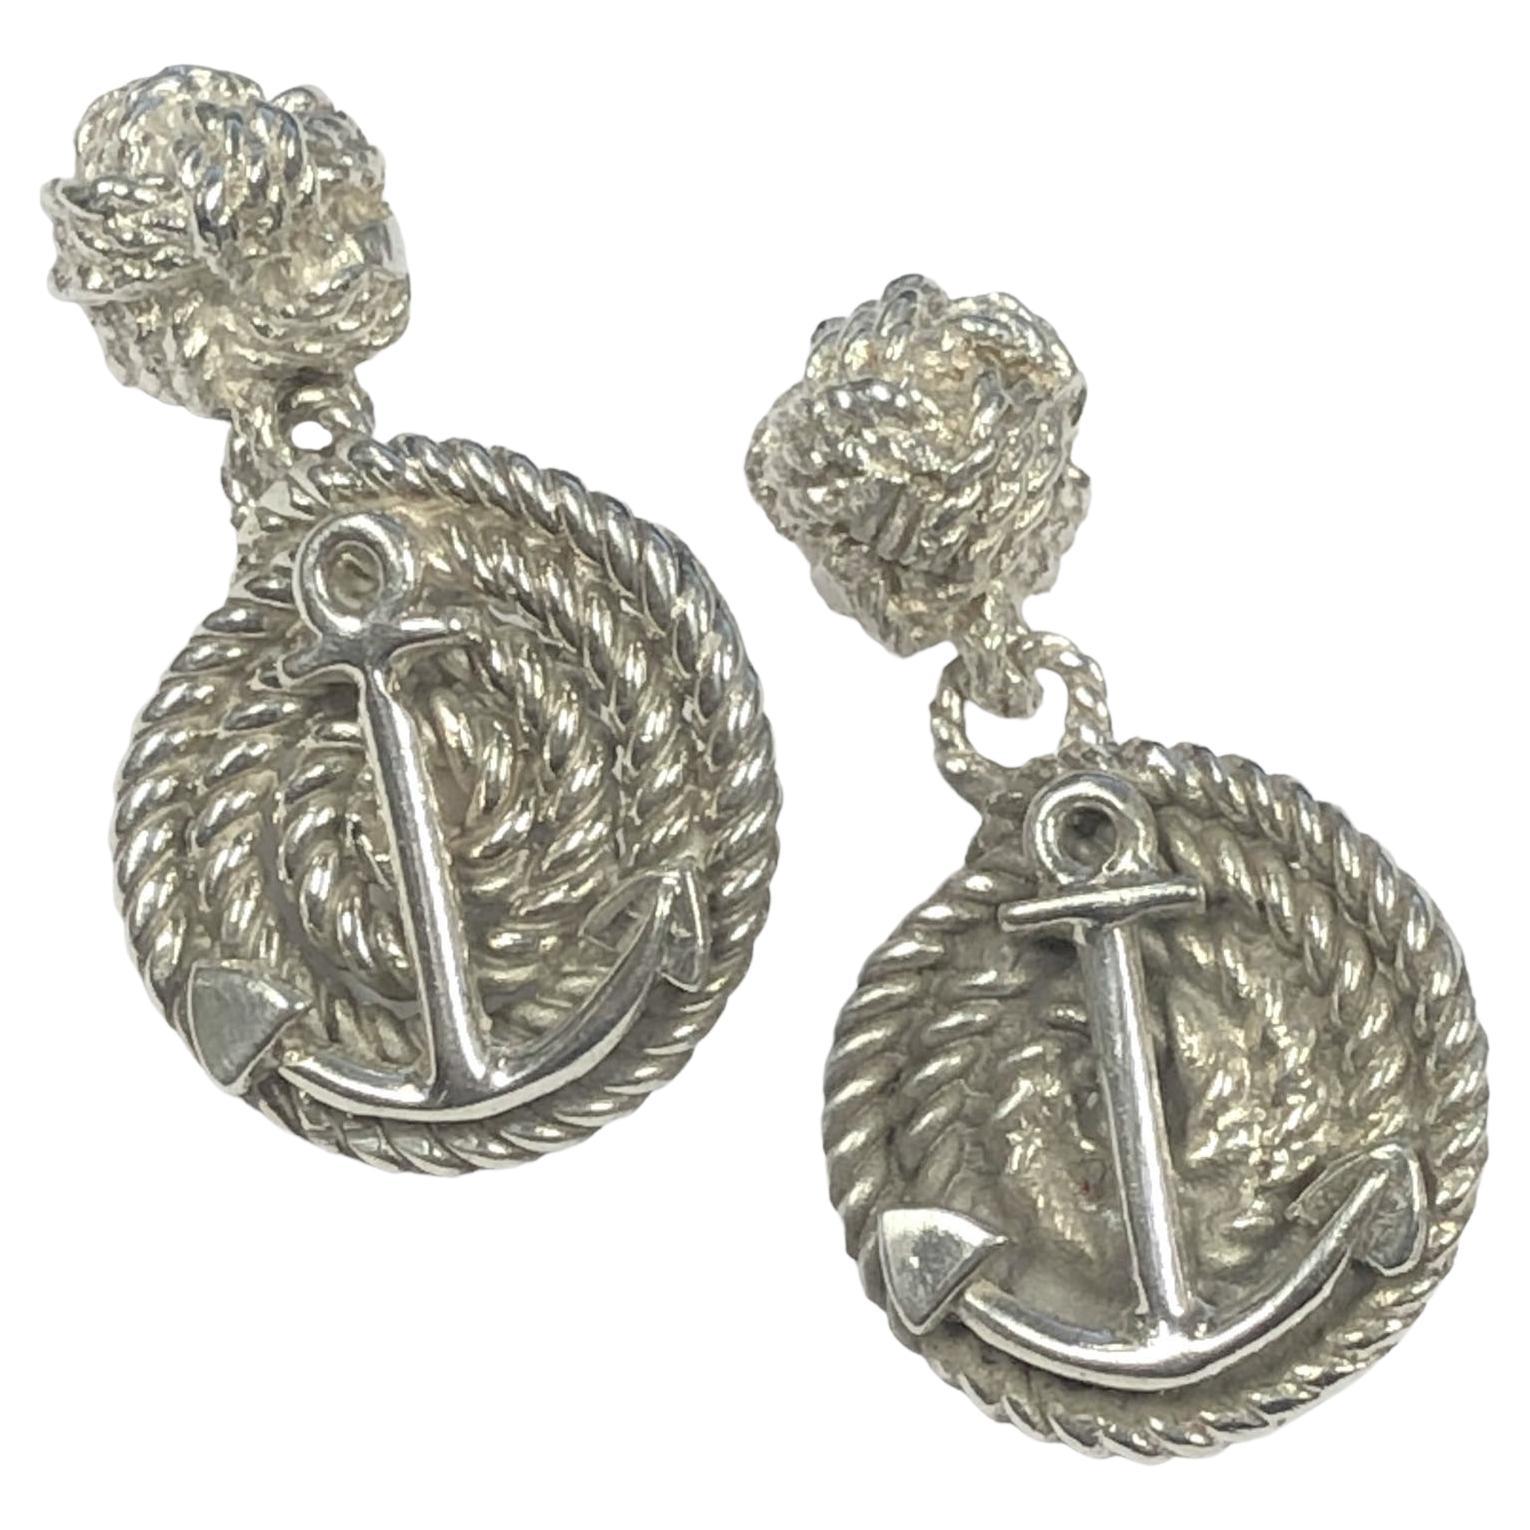 Tiffany & Company France Nautical Sterling Silver Cufflinks